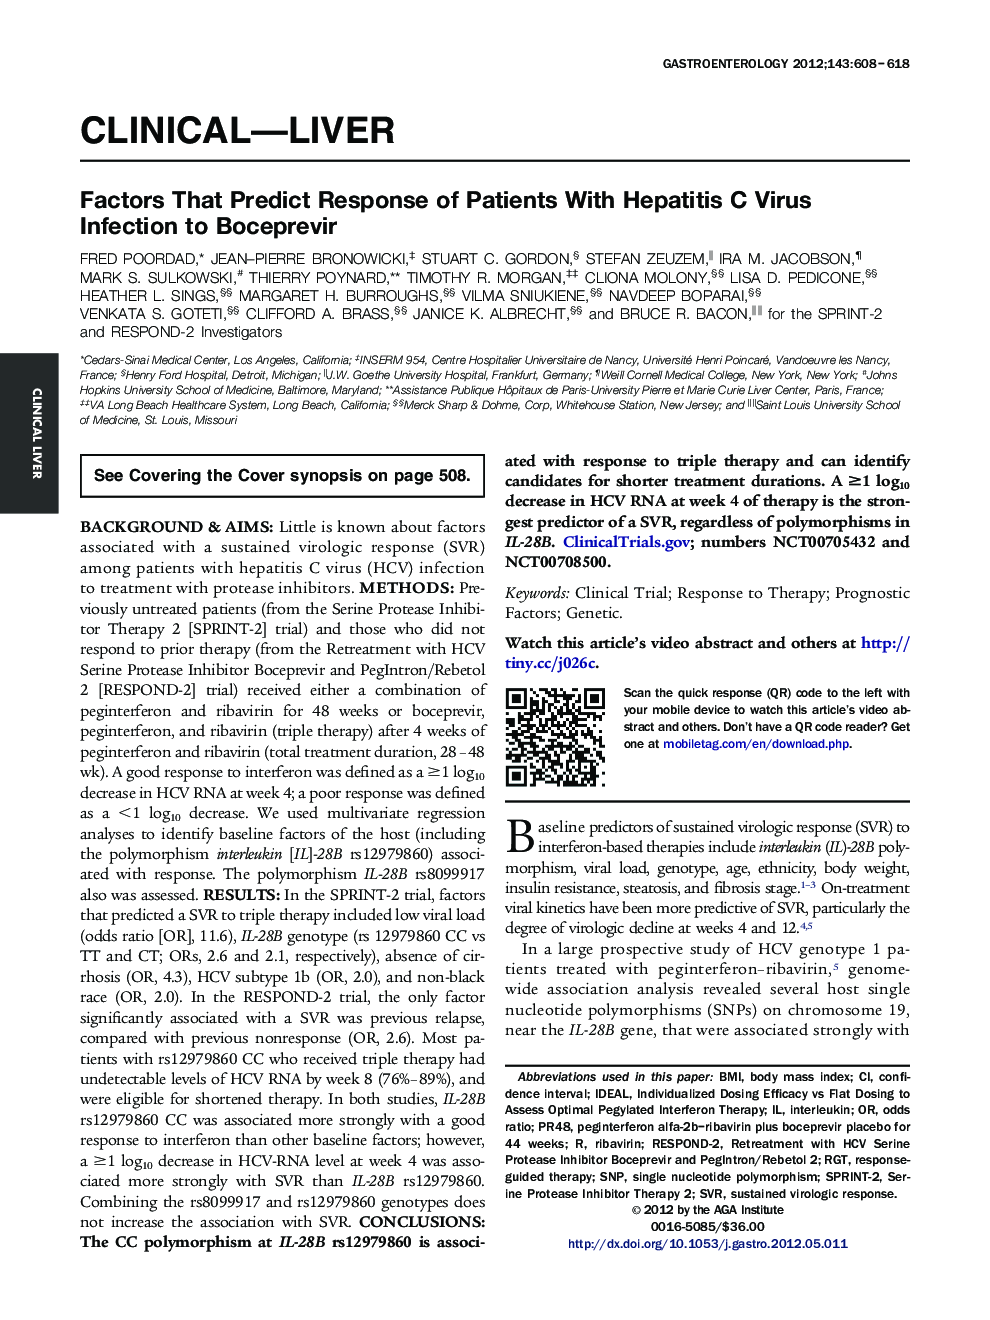 Factors That Predict Response of Patients With Hepatitis C Virus Infection to Boceprevir